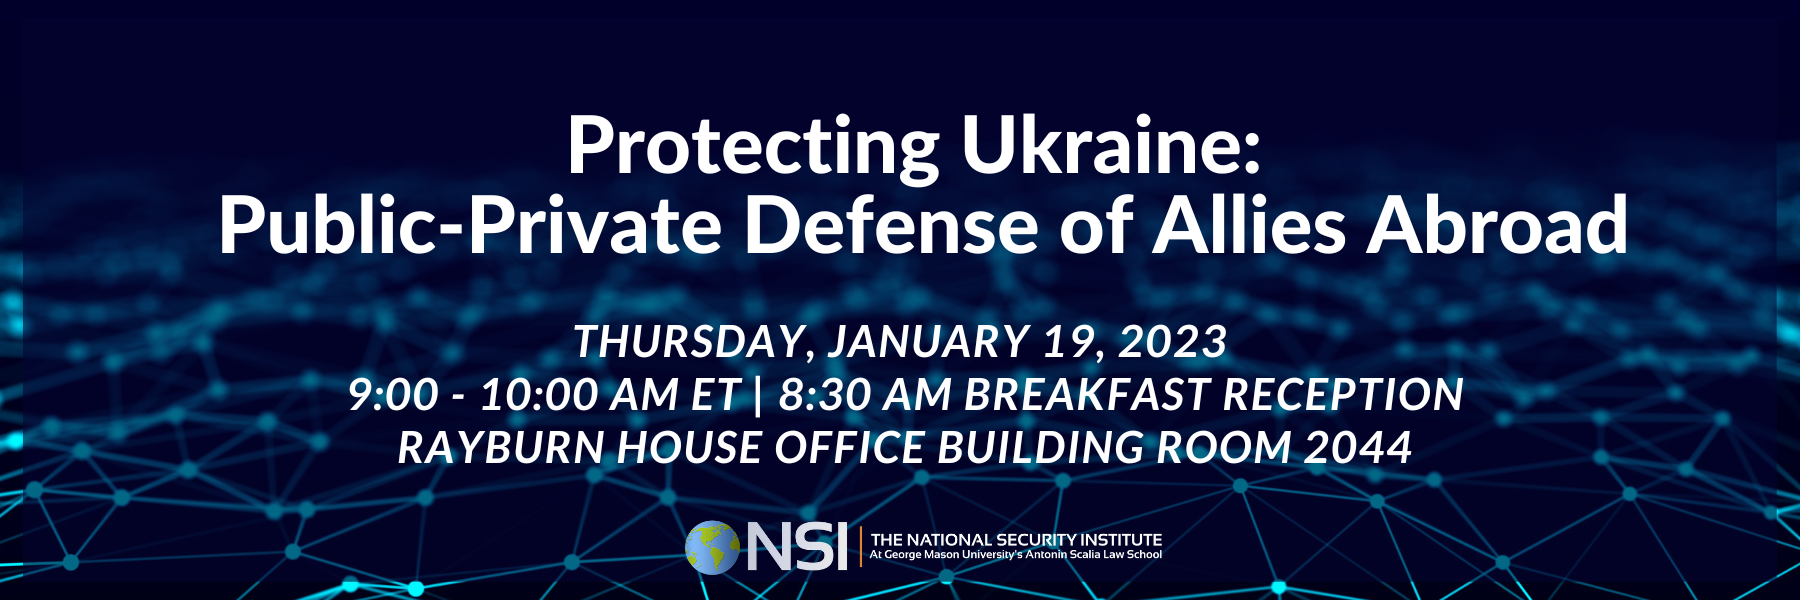 Protecting Ukraine: Public-Private Defense of Allies Abroad